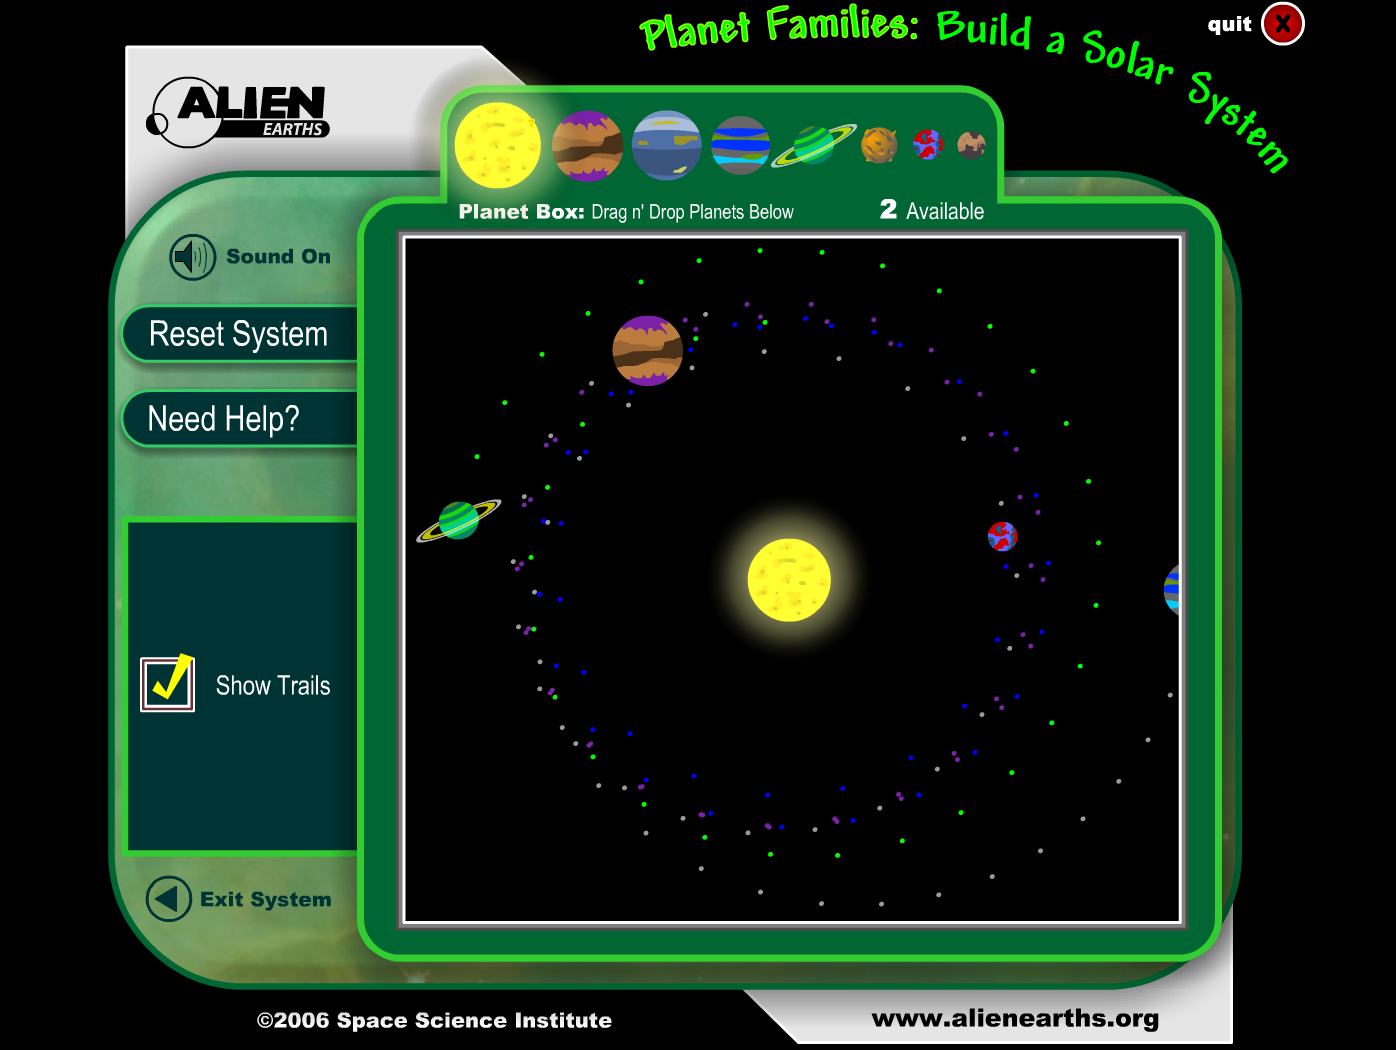 Solar System Background Information